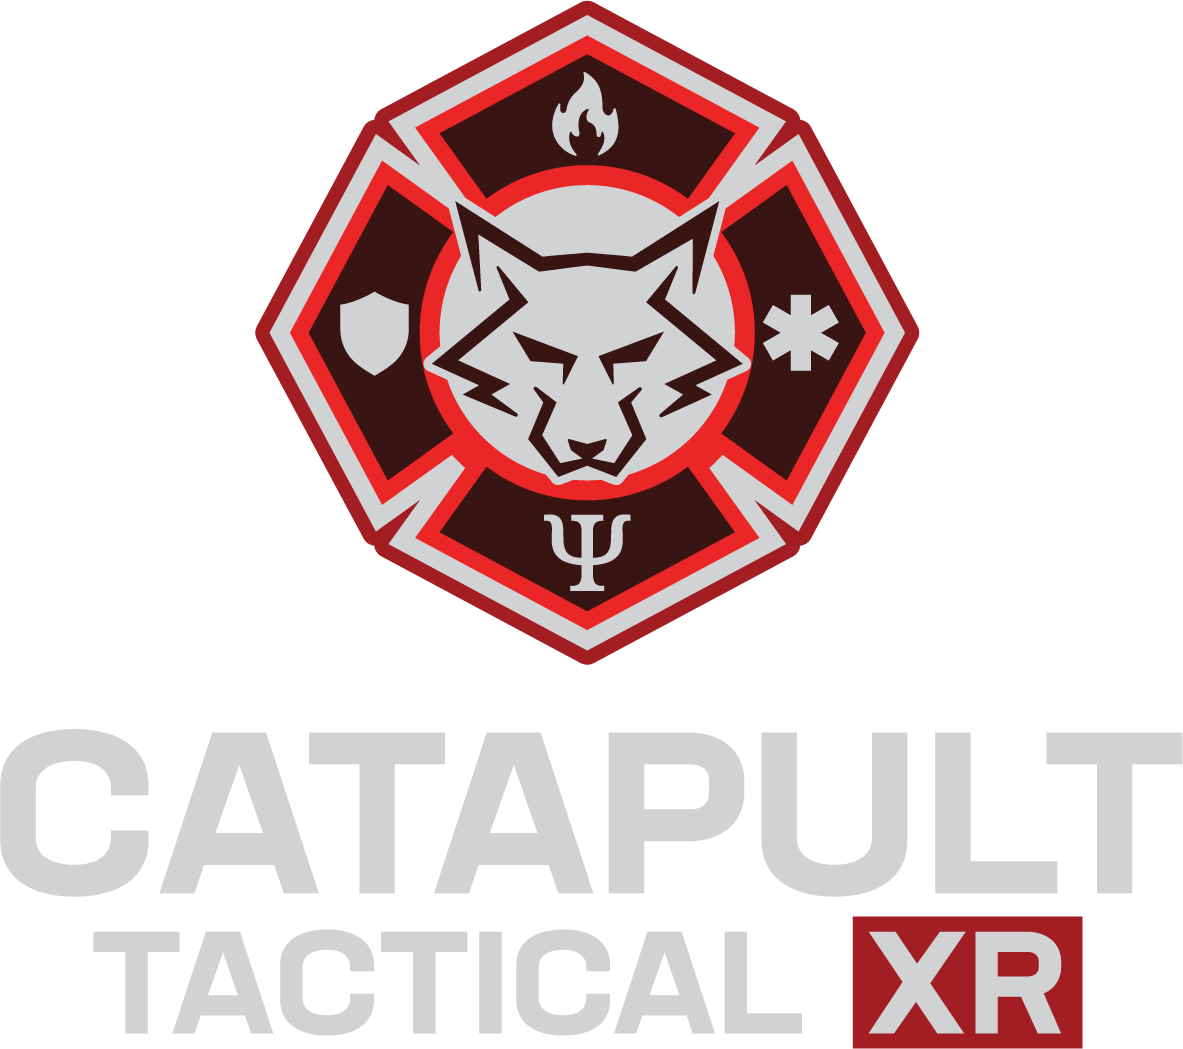 Catapult Tactical XR Logo